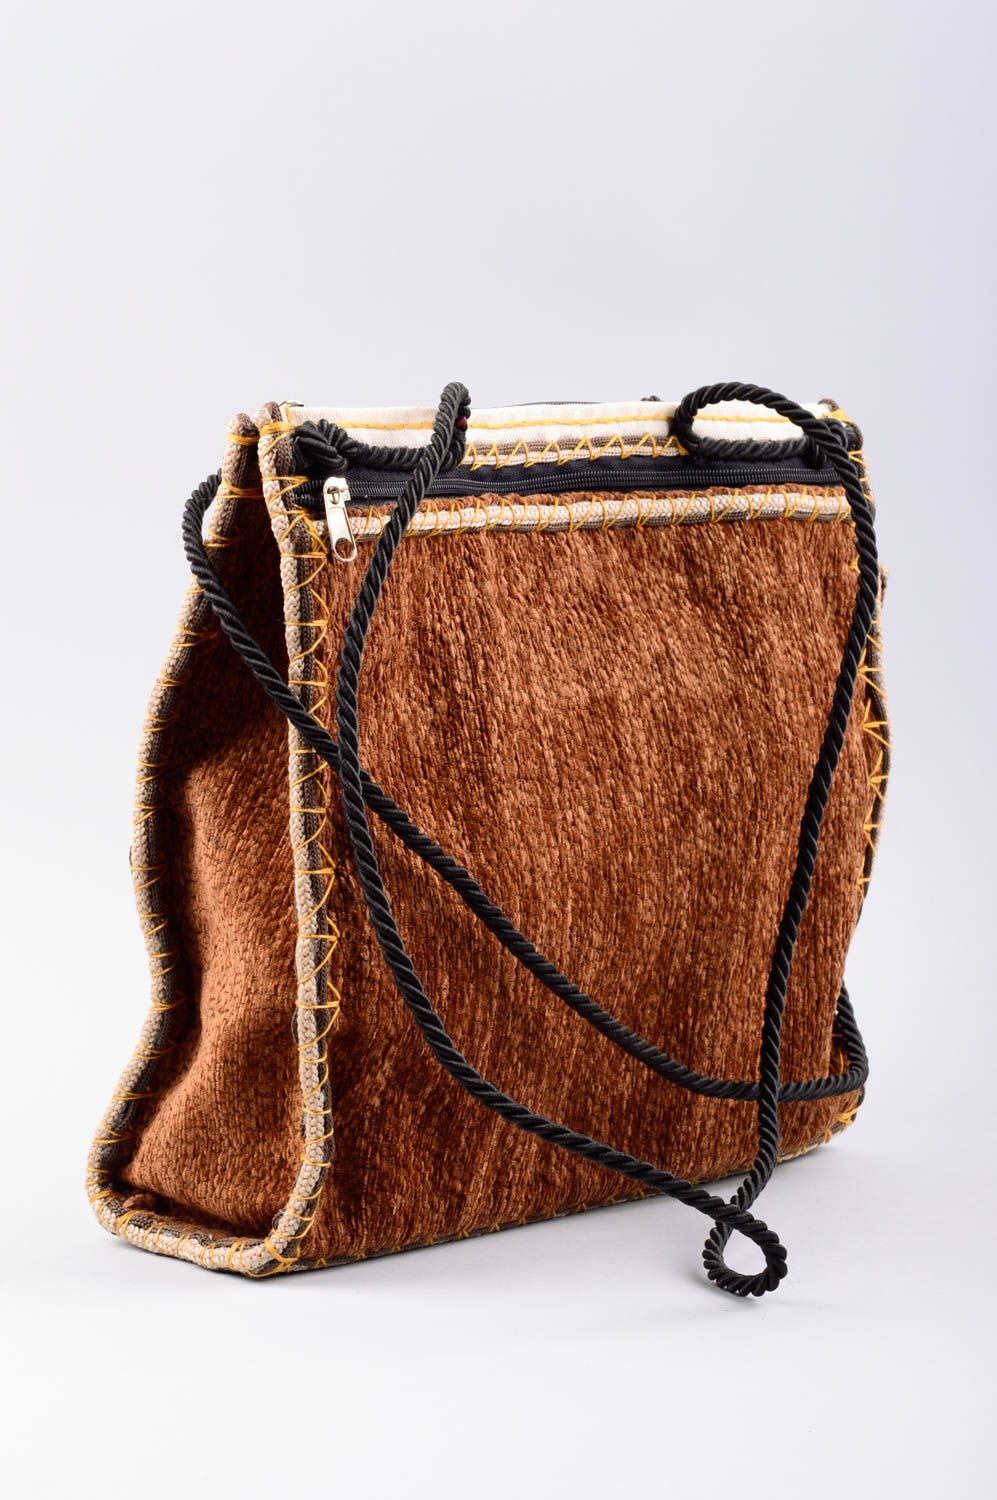 Grand sac à main en tissu fait main avec motifs ethniques design original photo 2